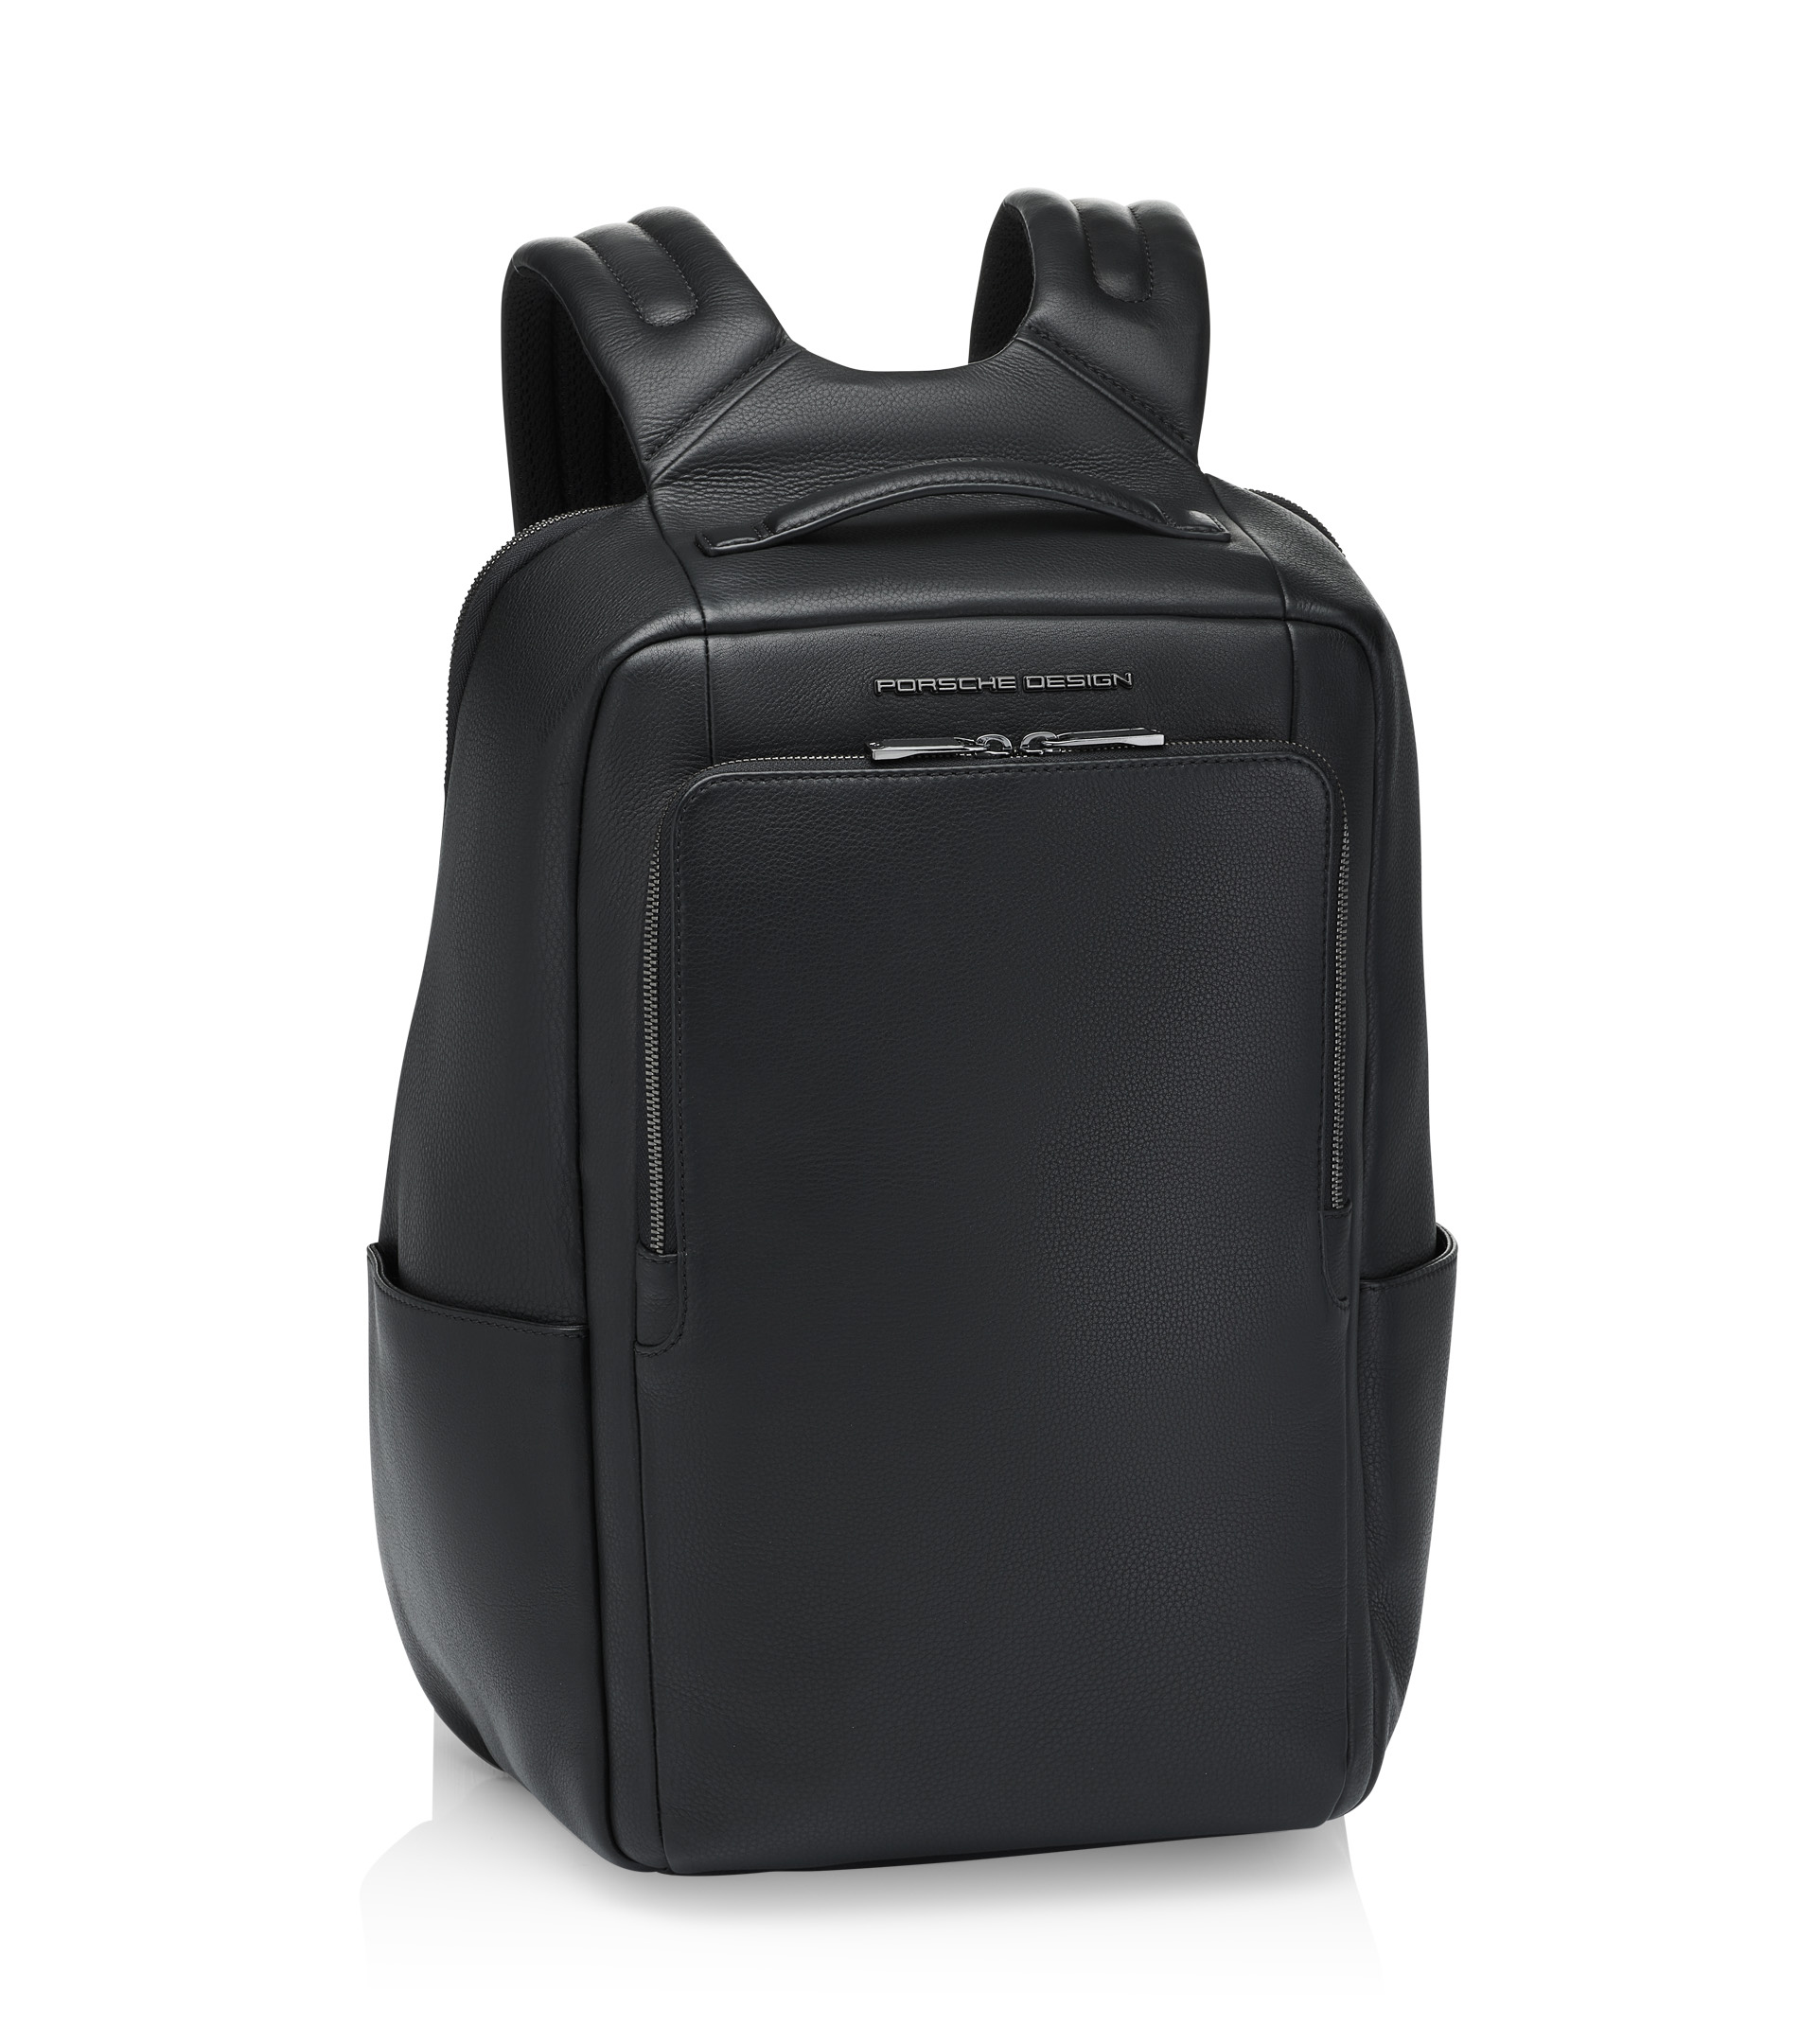 Phorce Pro is a Sophisticated Smart Bag Designed for Today's Mobile  Workforce » Gadget Flow